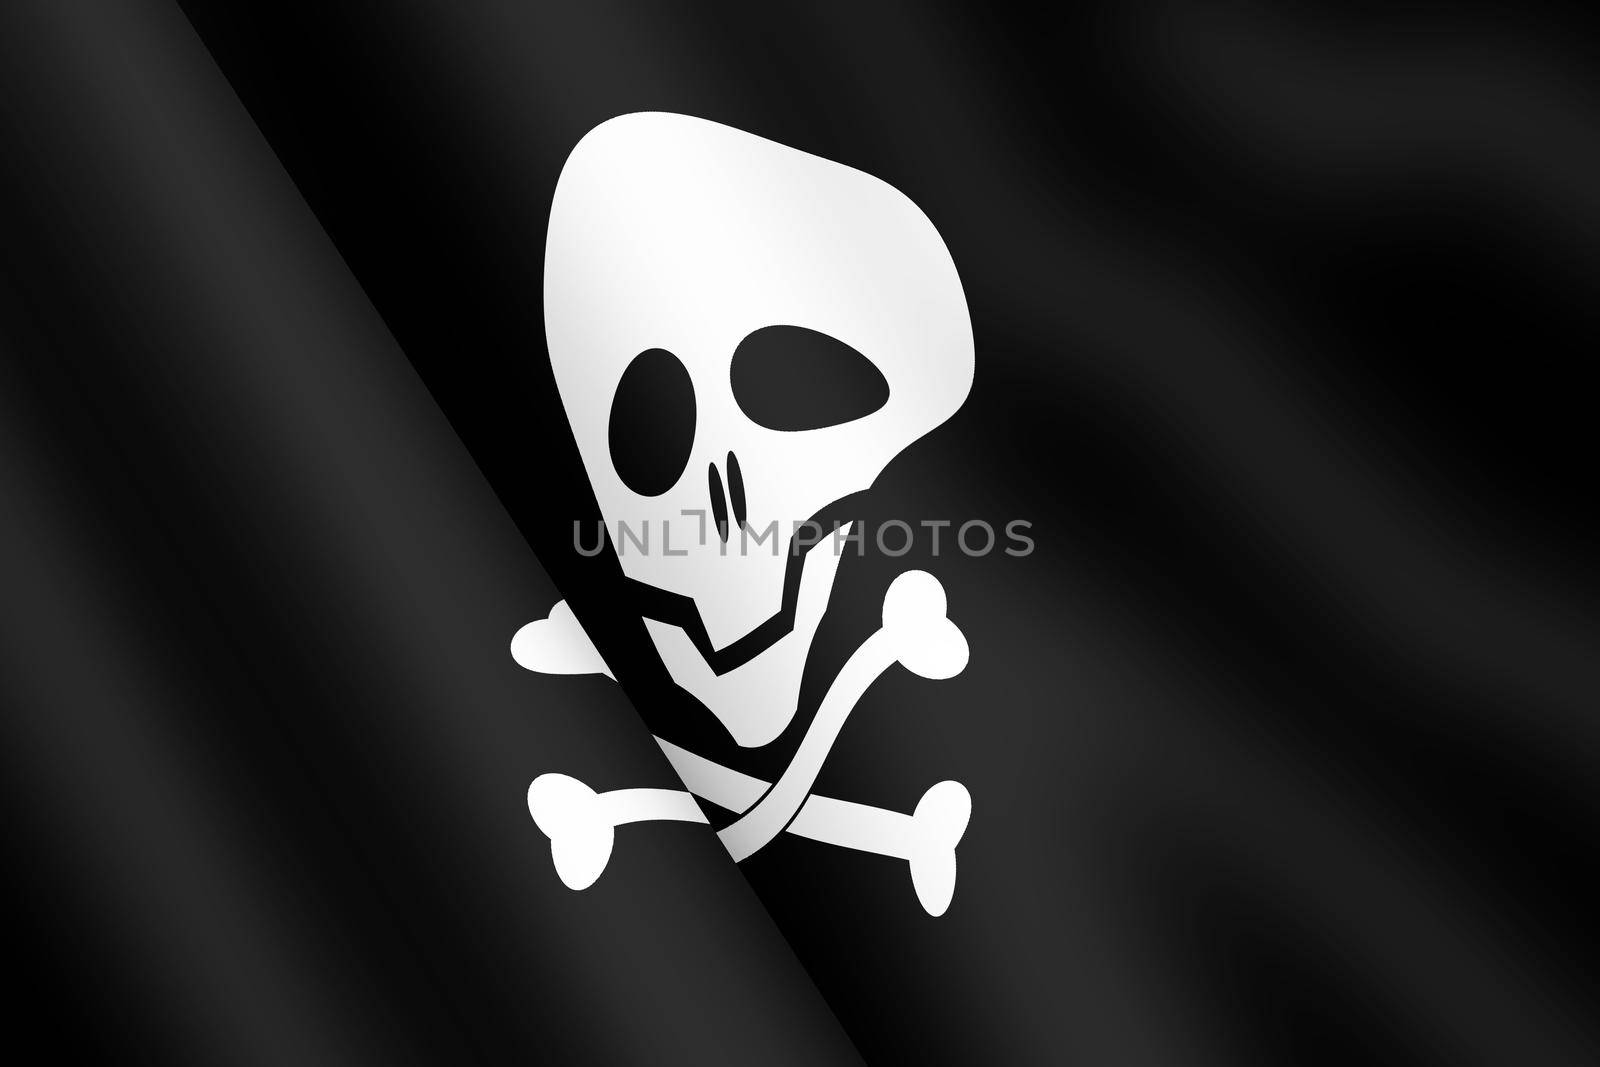 Jolly Roger skull and cross bones pirate flag waving flag 3d illustration by VivacityImages